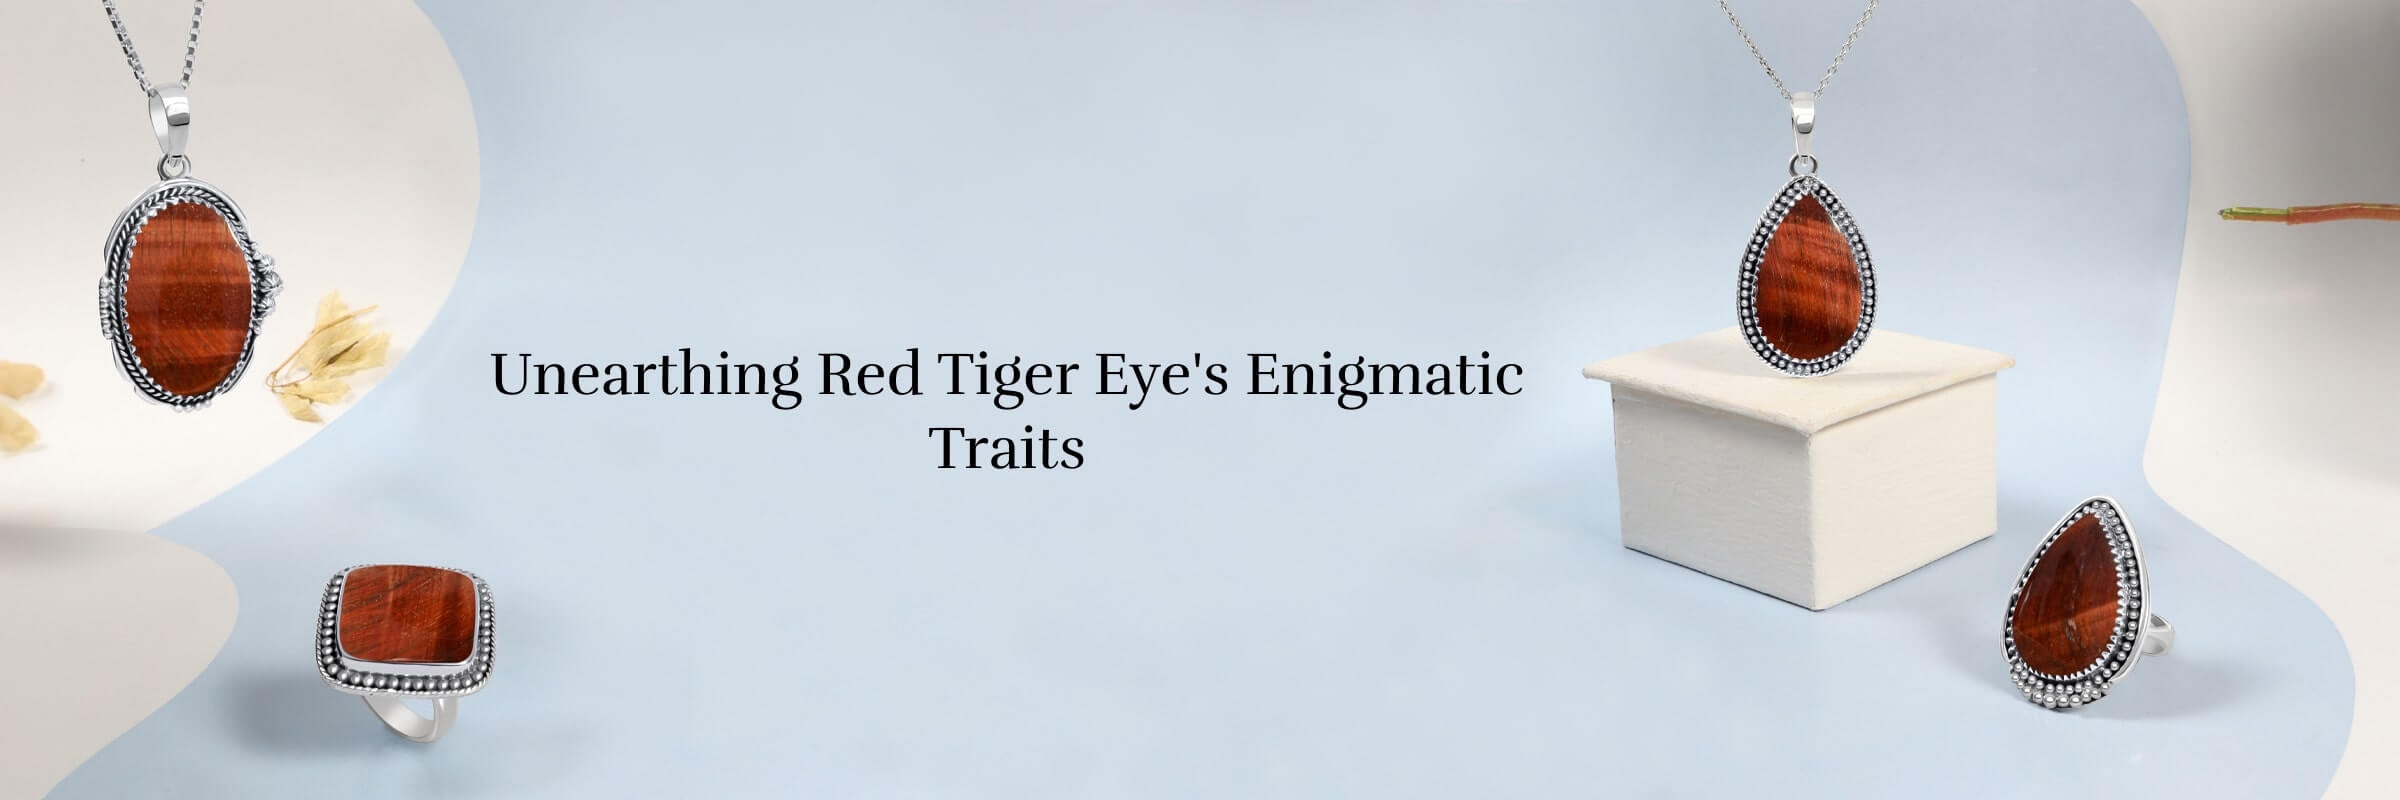 Red Tiger Eye Properties